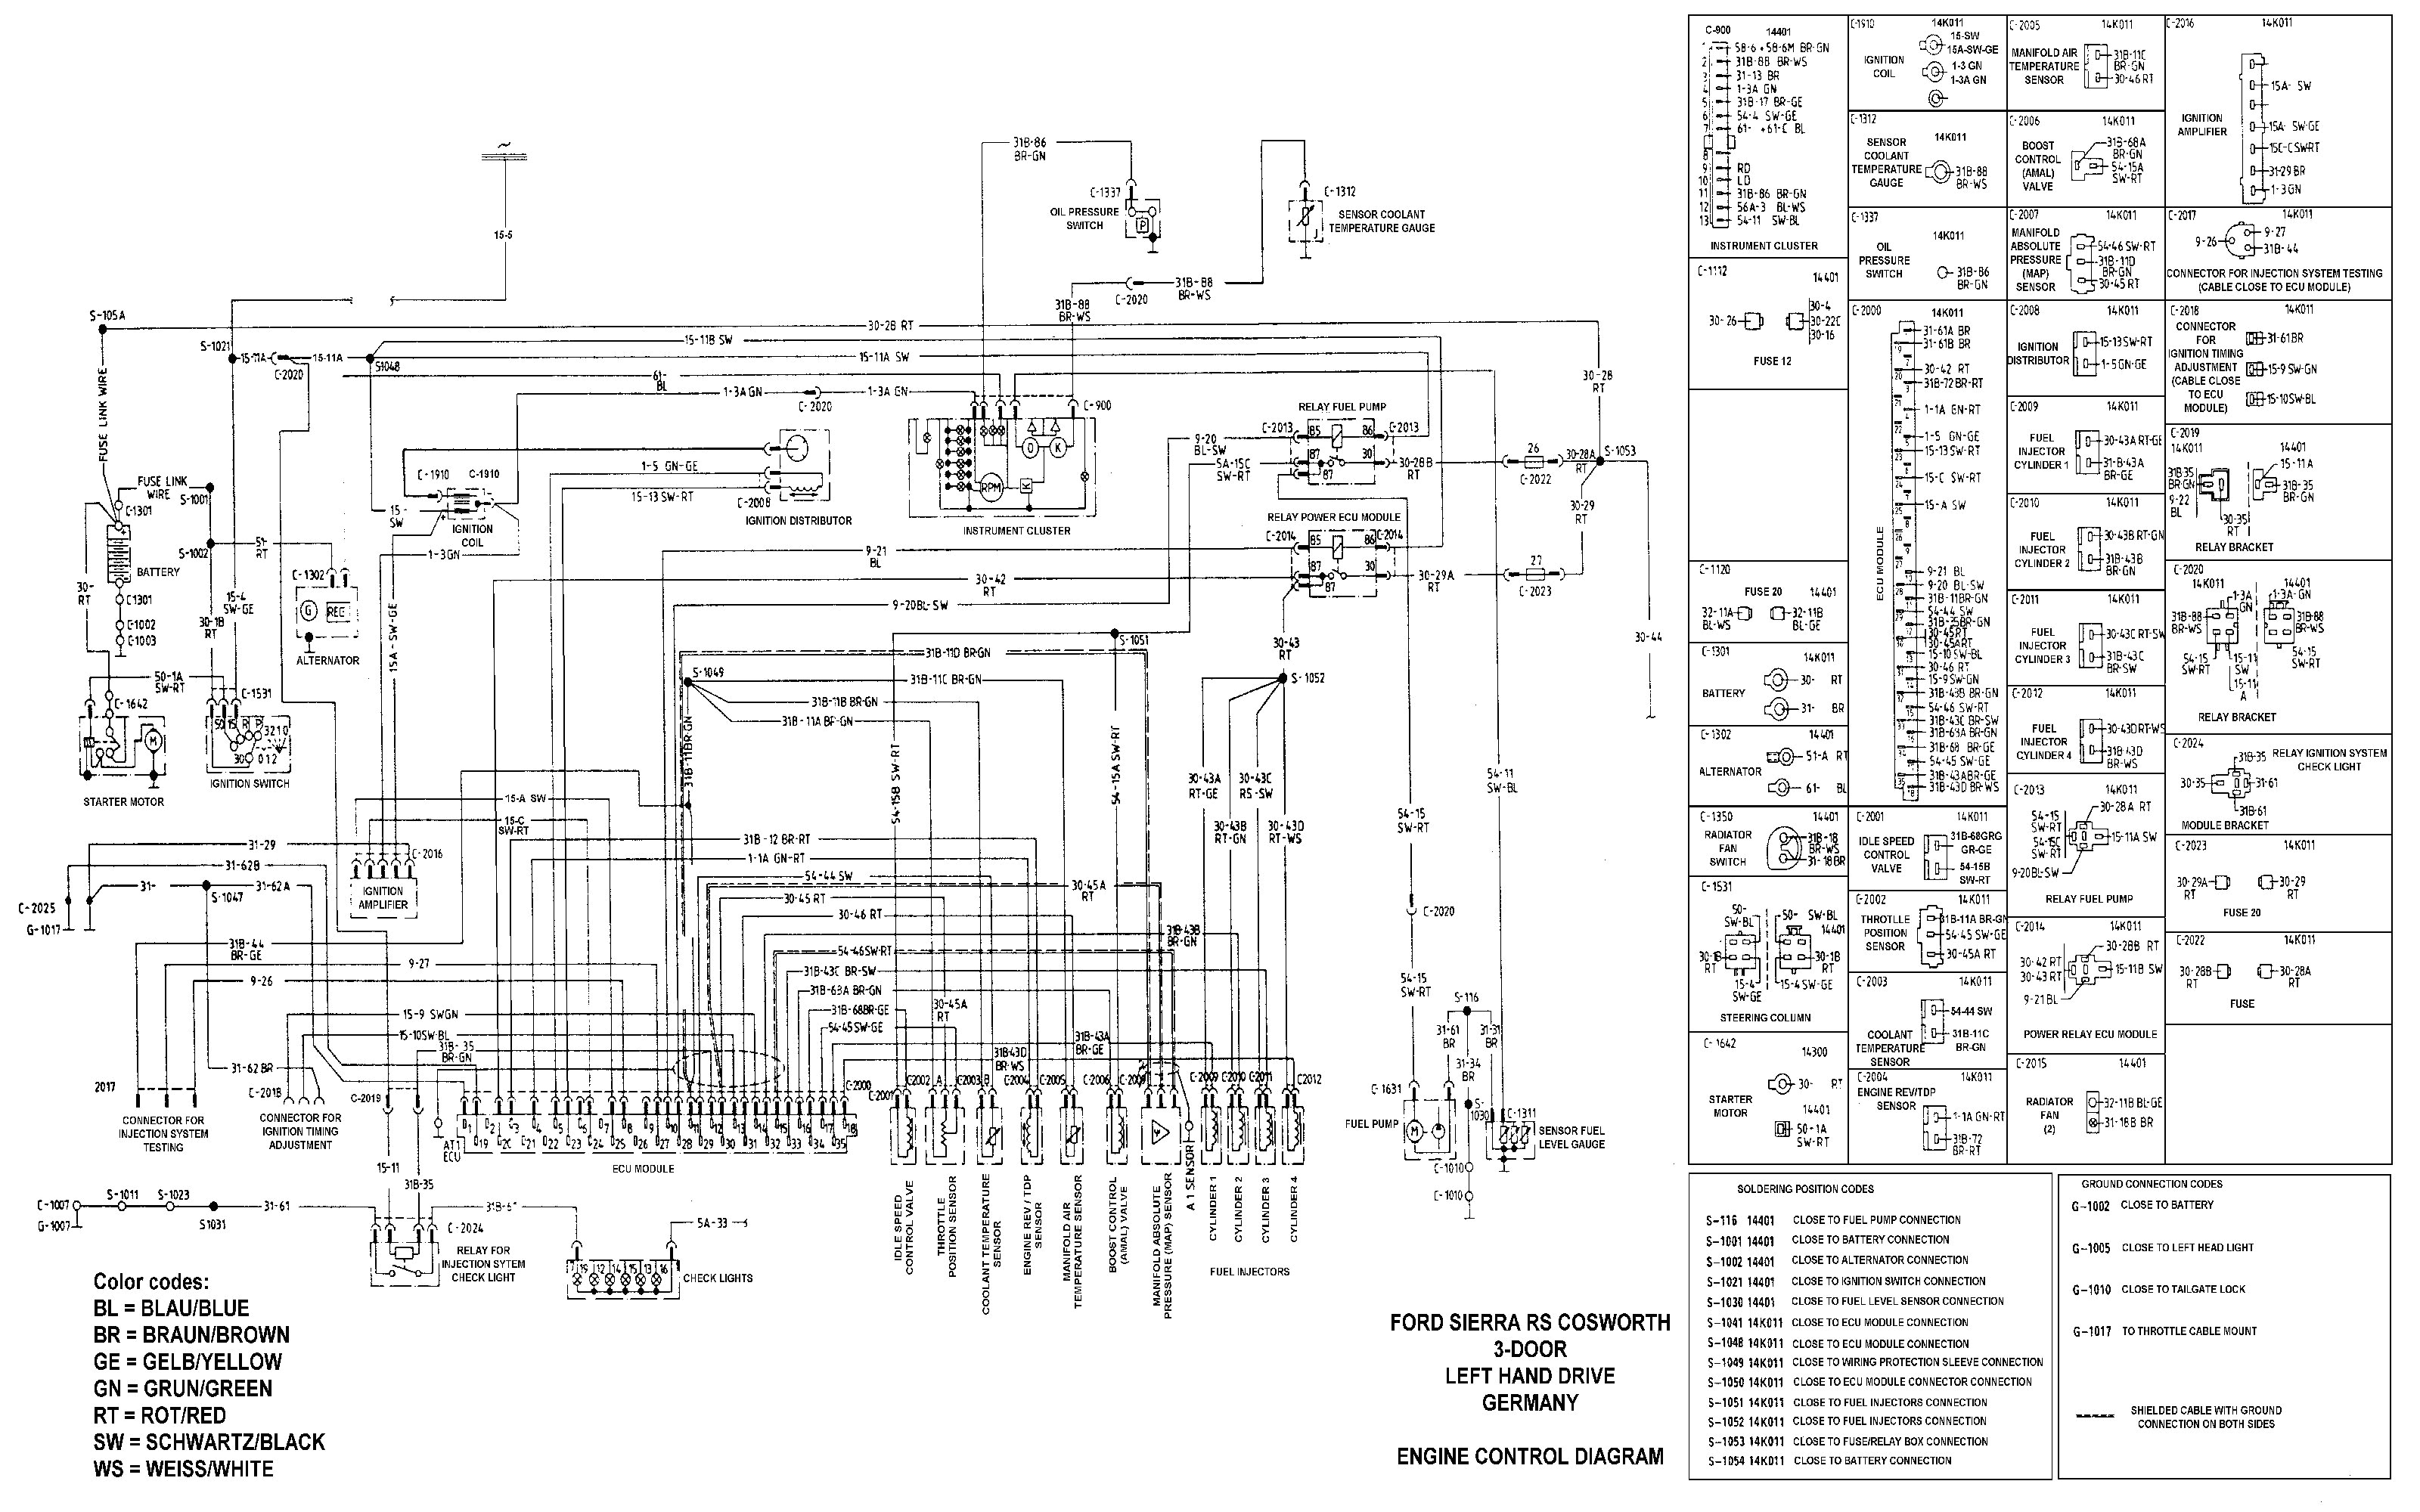 1993 ford festiva engine diagram wiring diagram view 1980 ford festiva wiring